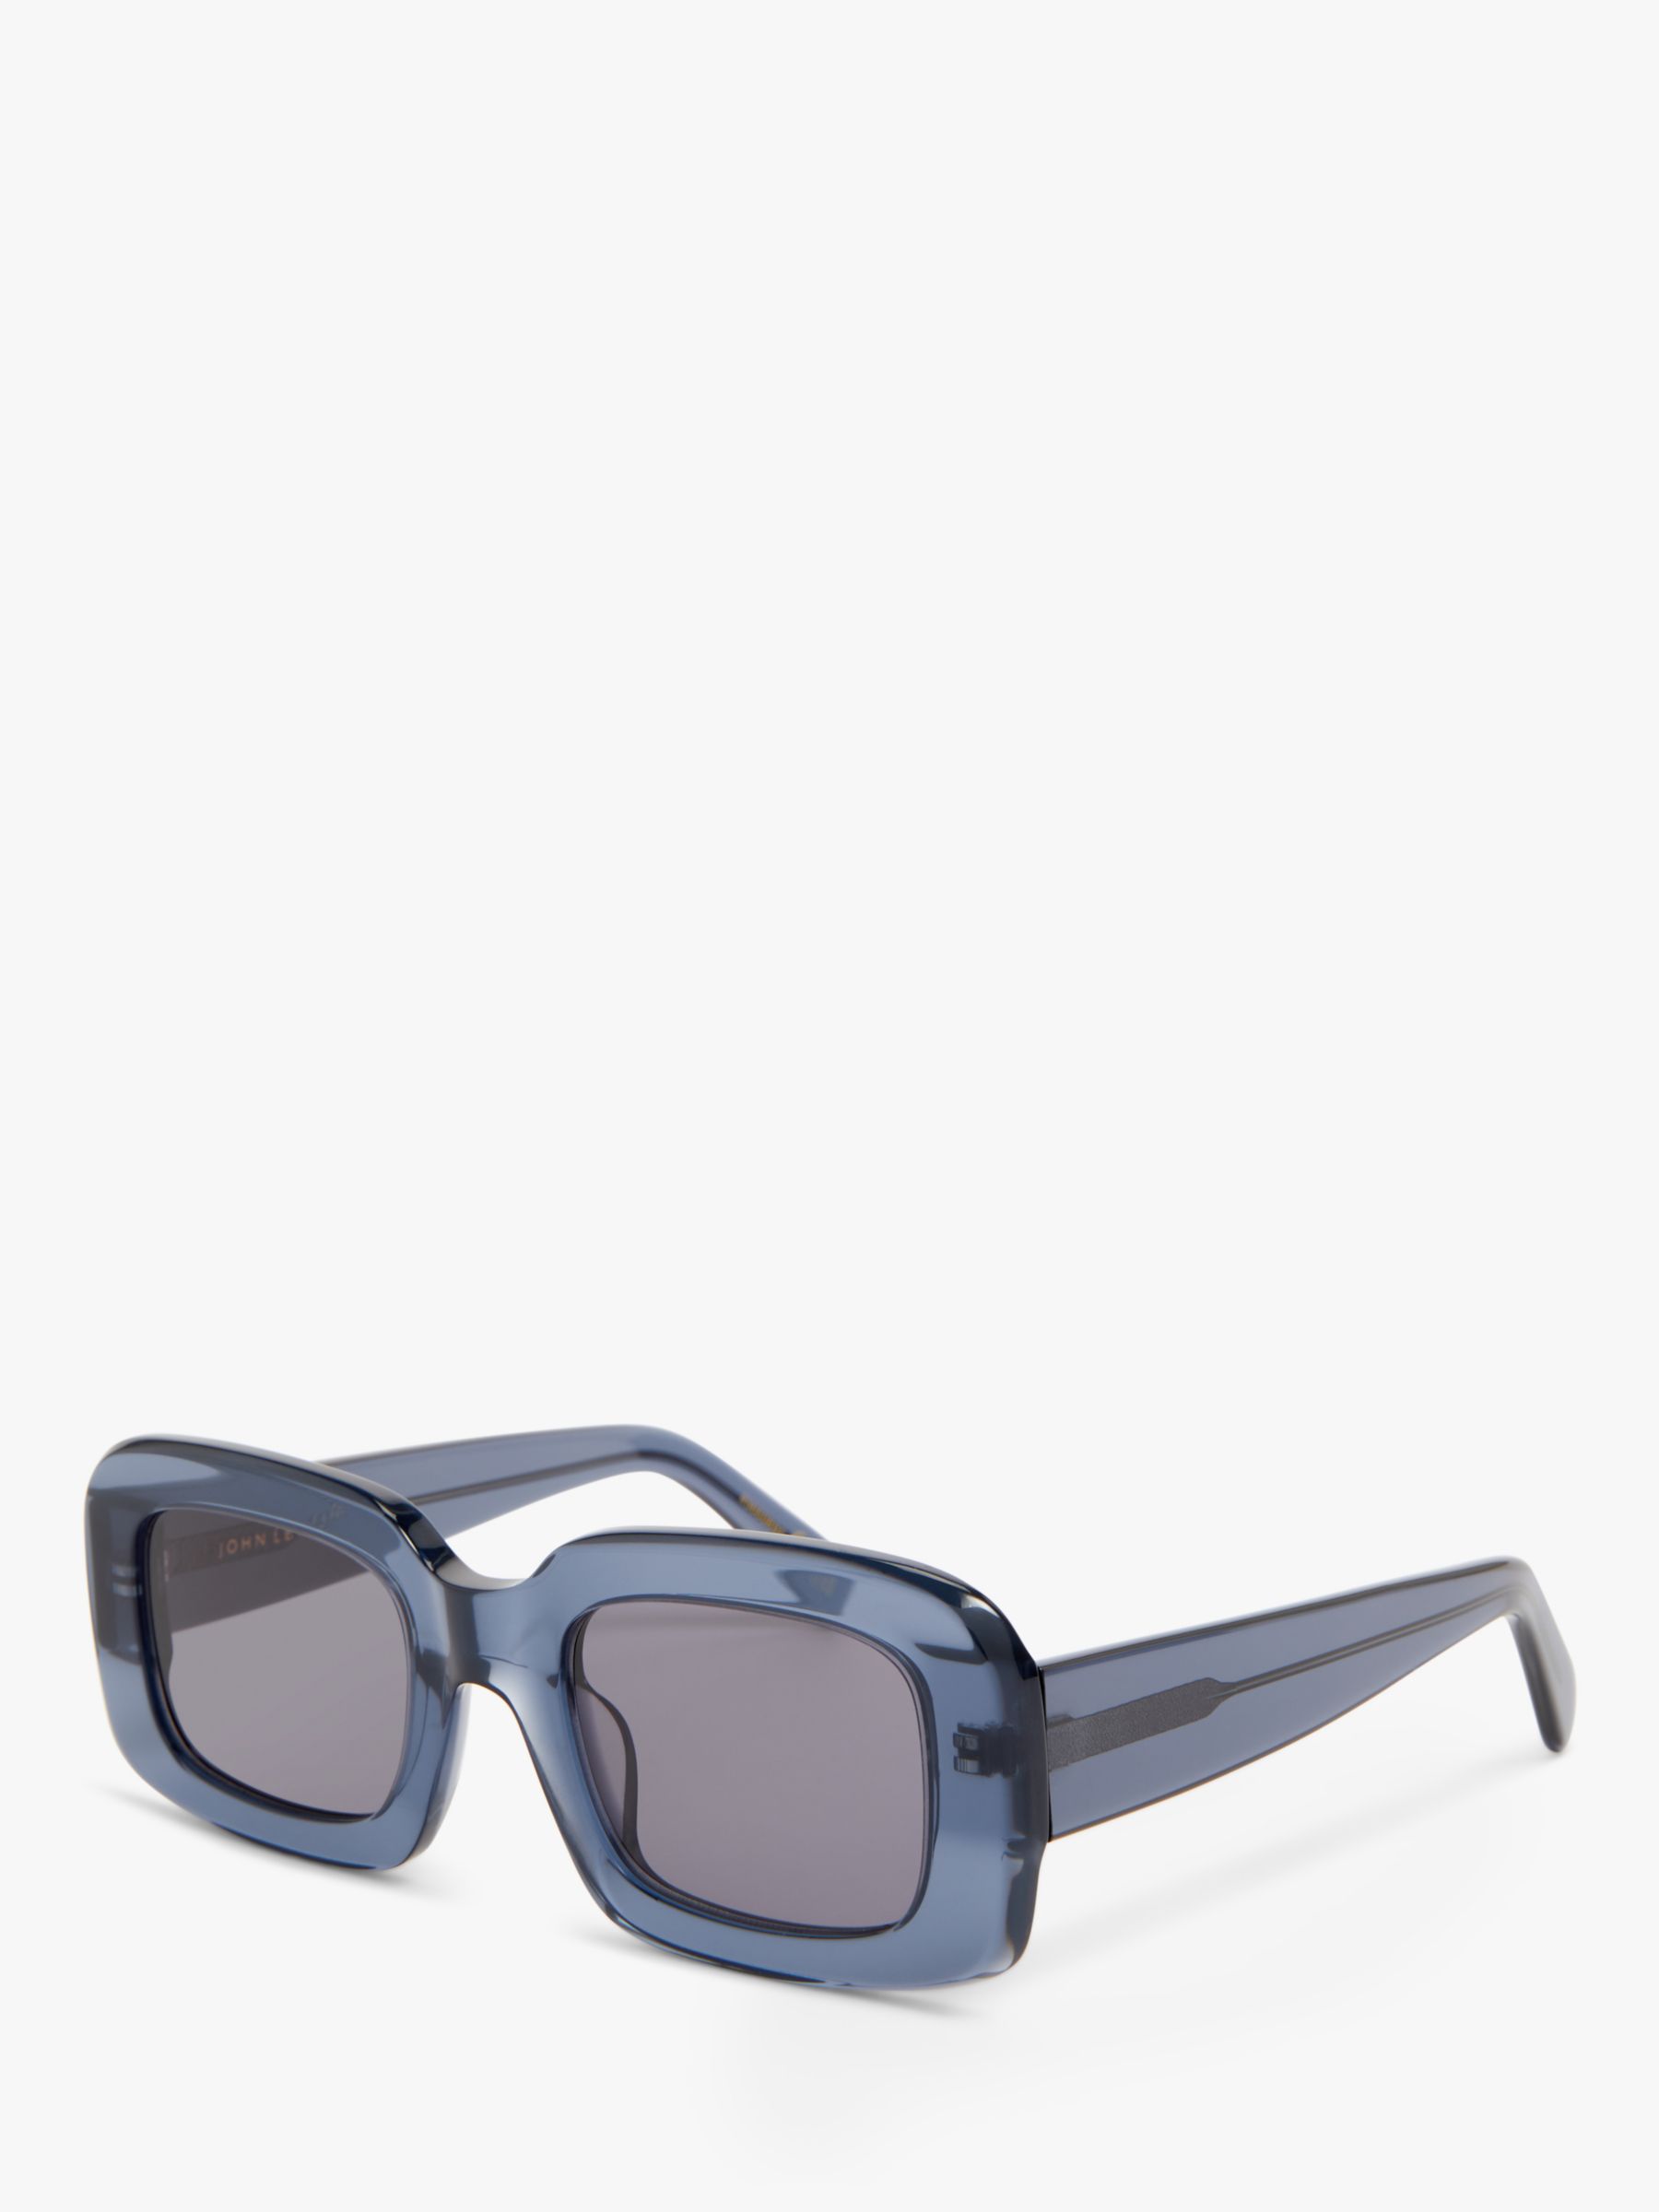 John Lewis Women's Rectangular Sunglasses, Denim Blue/Grey